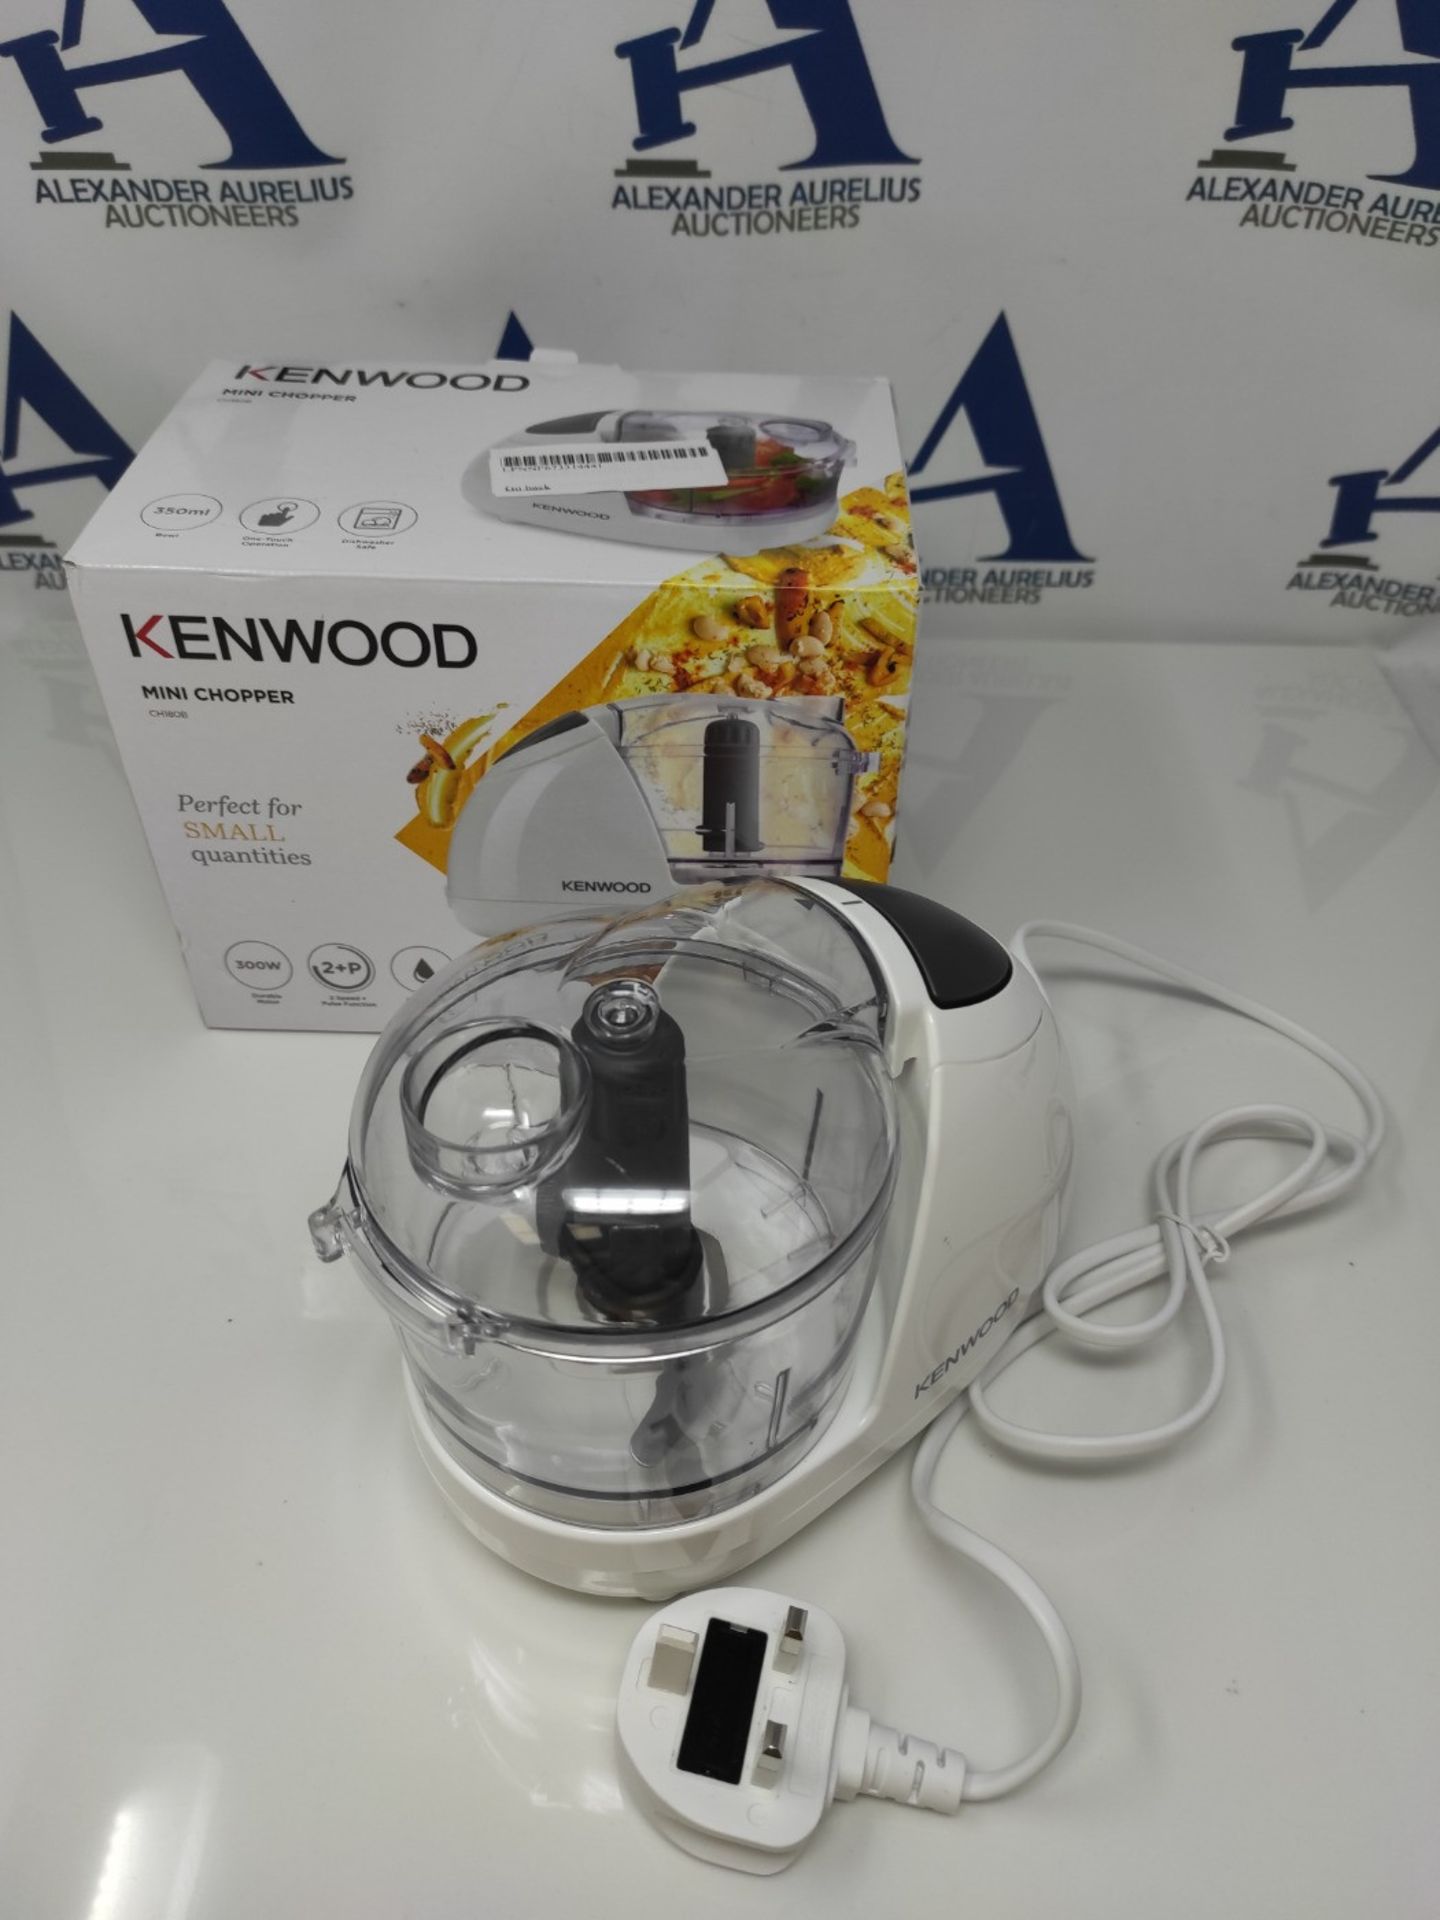 Kenwood Mini Chopper, 0.35 Litre Dishwasher Safe Bowl, 2 Speeds, Rubber Feet for Food - Bild 2 aus 2